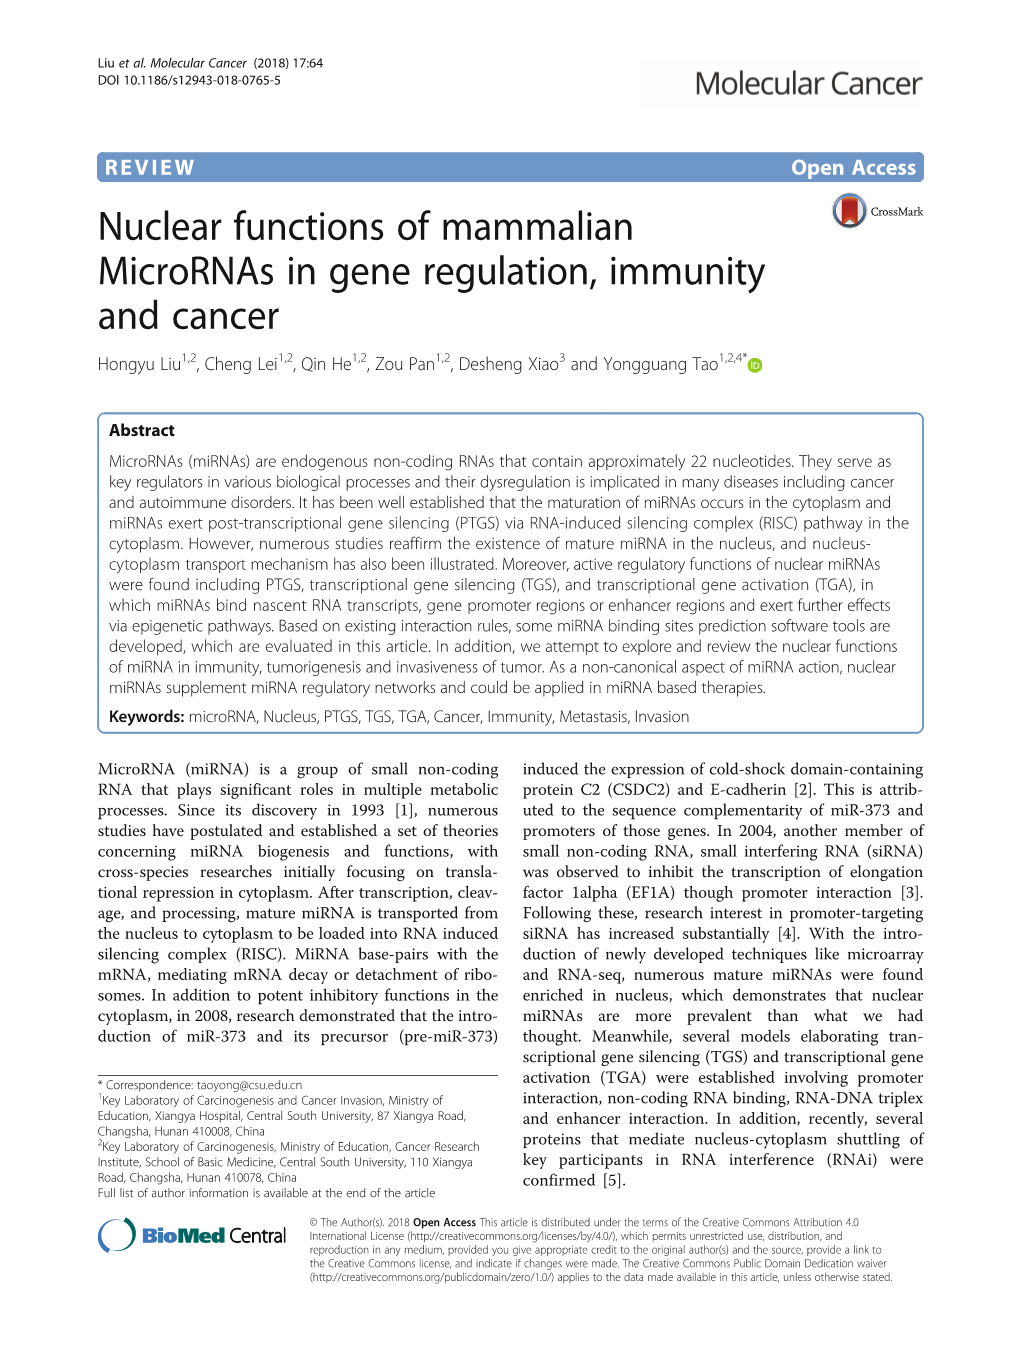 Nuclear Functions of Mammalian Micrornas in Gene Regulation